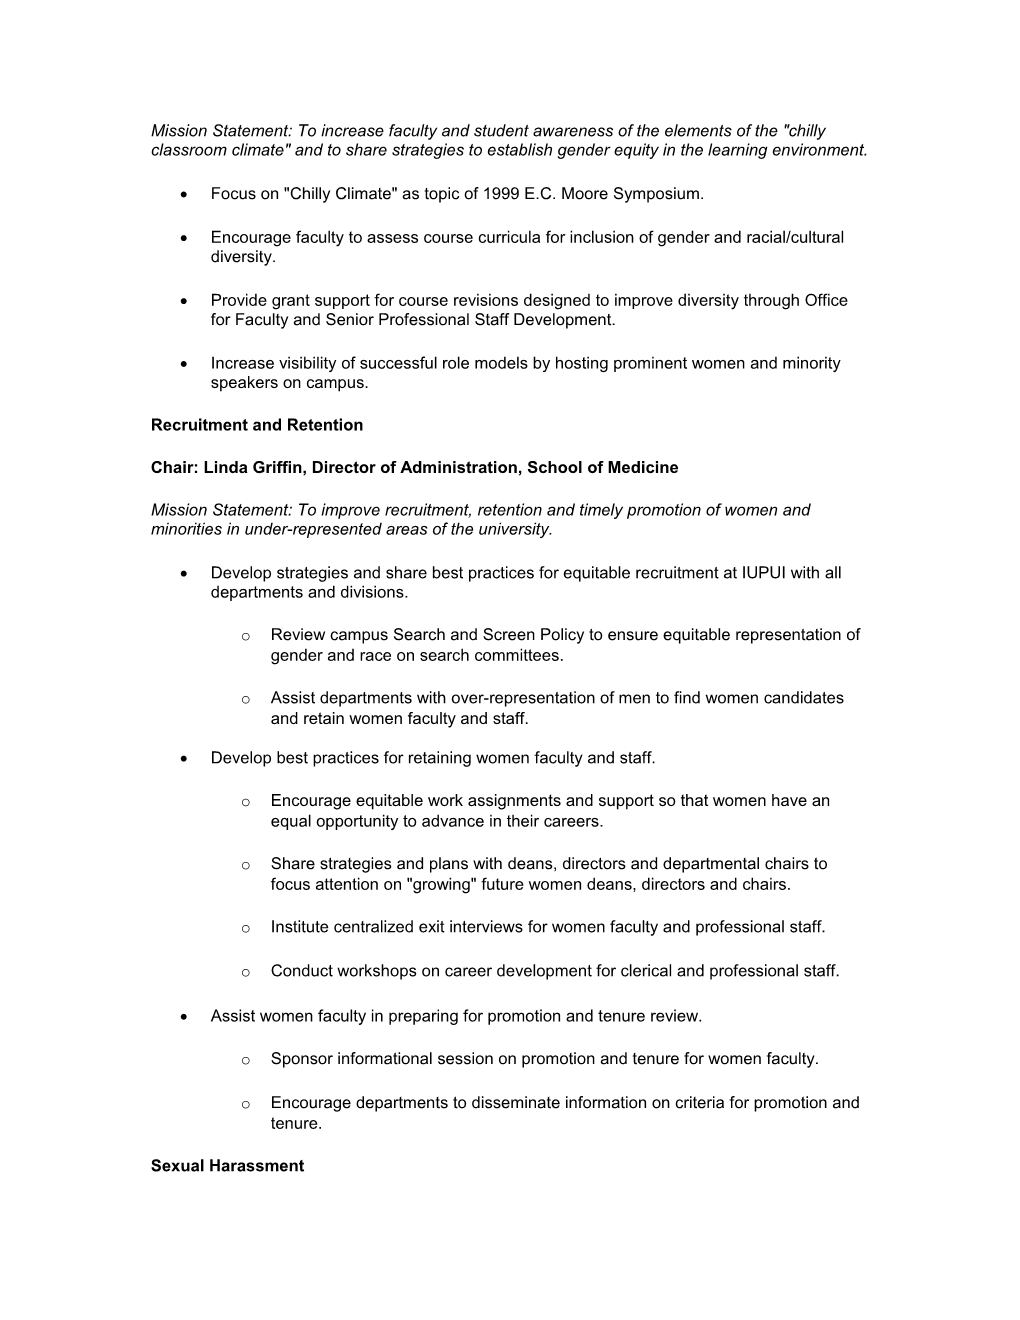 IUPUI Commission on Women Action Agenda 1998-99